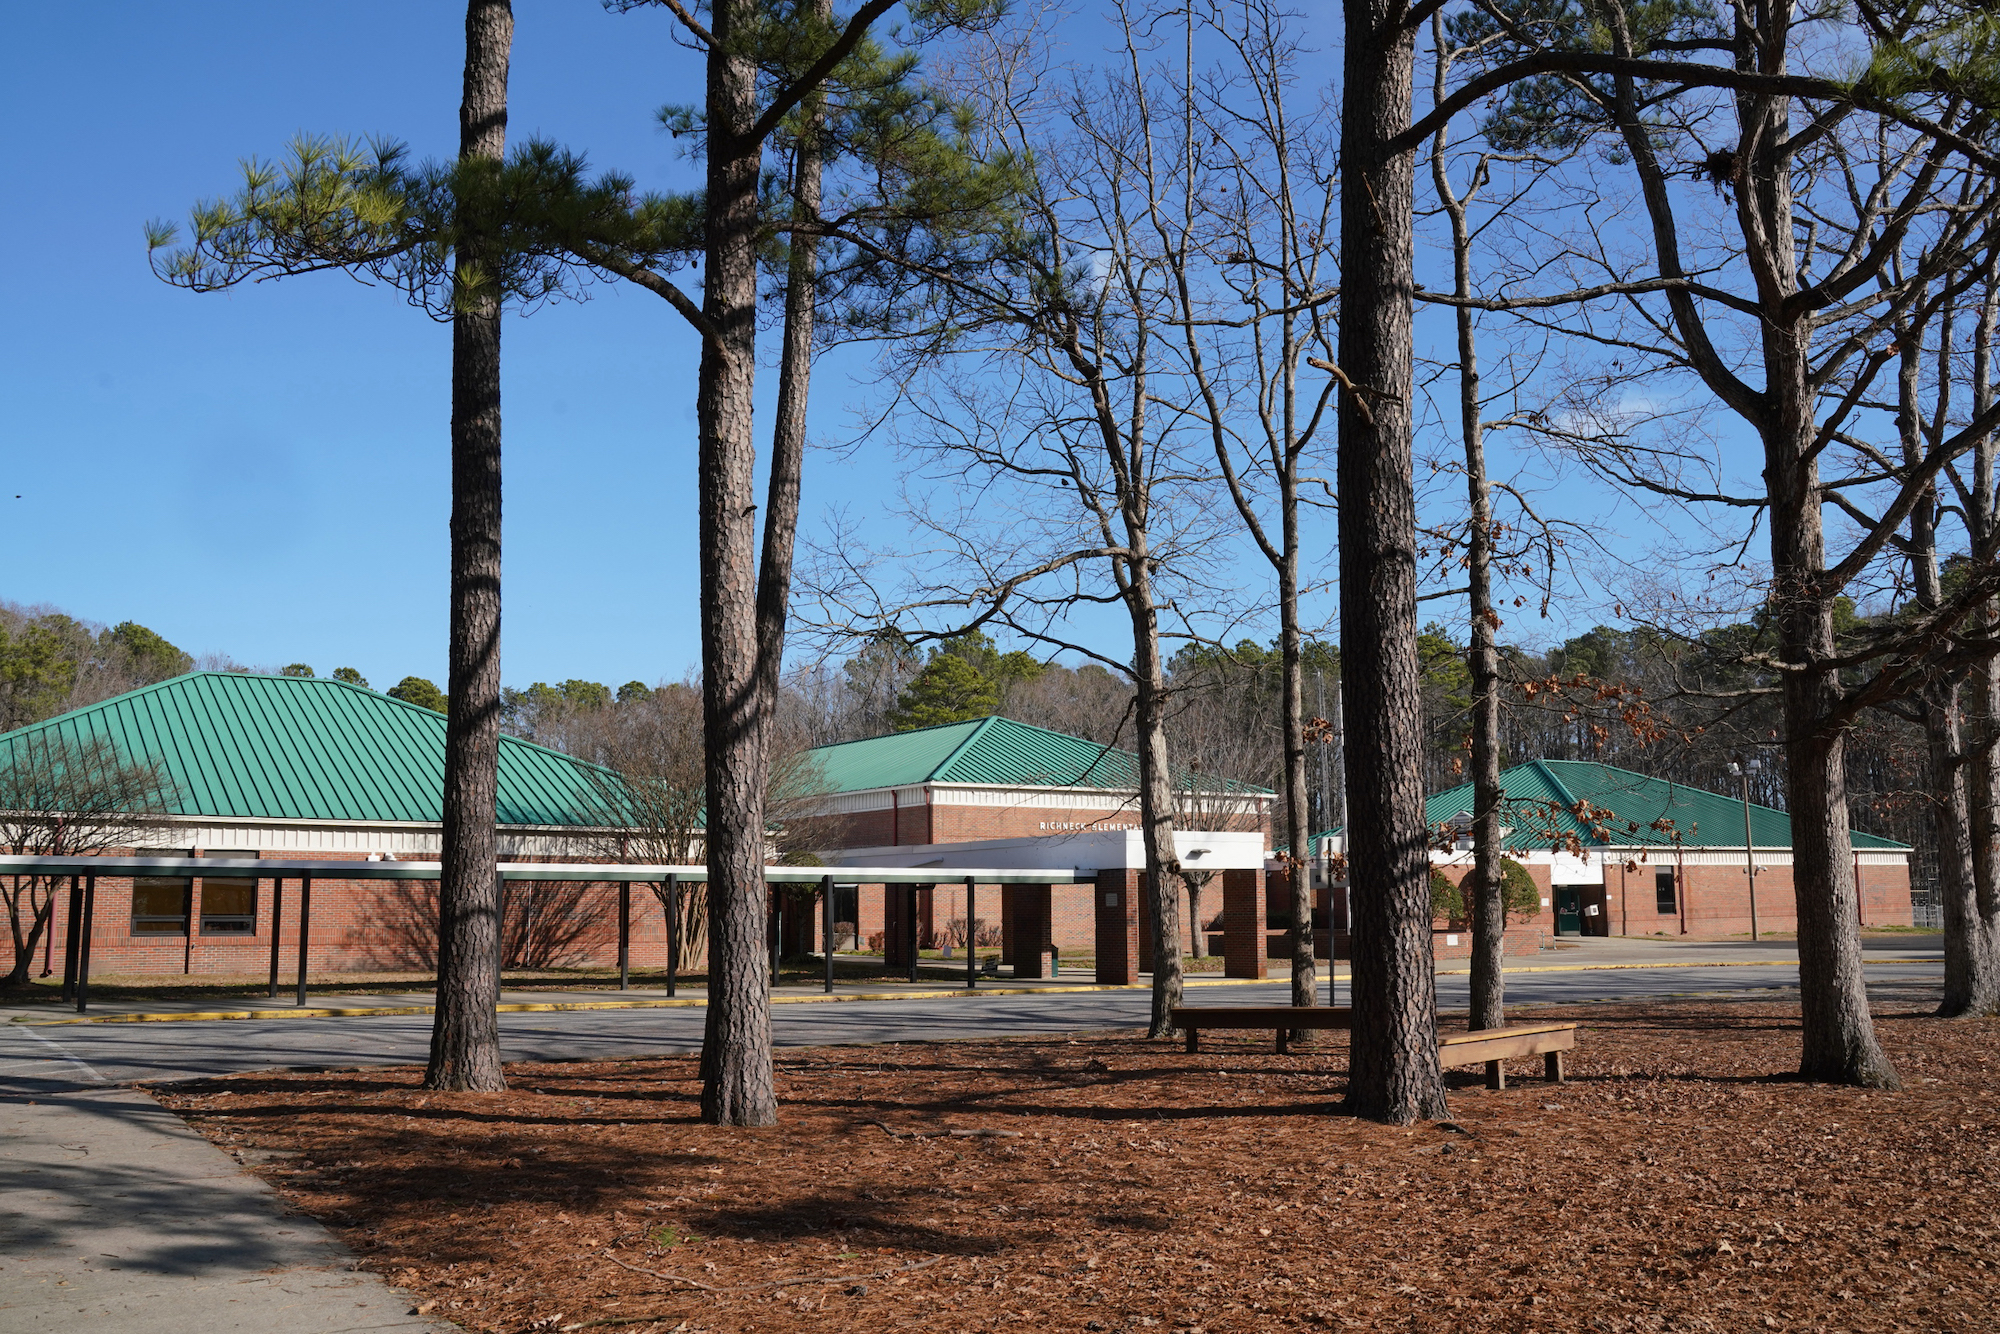 NEWPORT NEWS, VA - JANUARY 07: Tall pine trees outside Richneck Elementary School on January 7, 202...